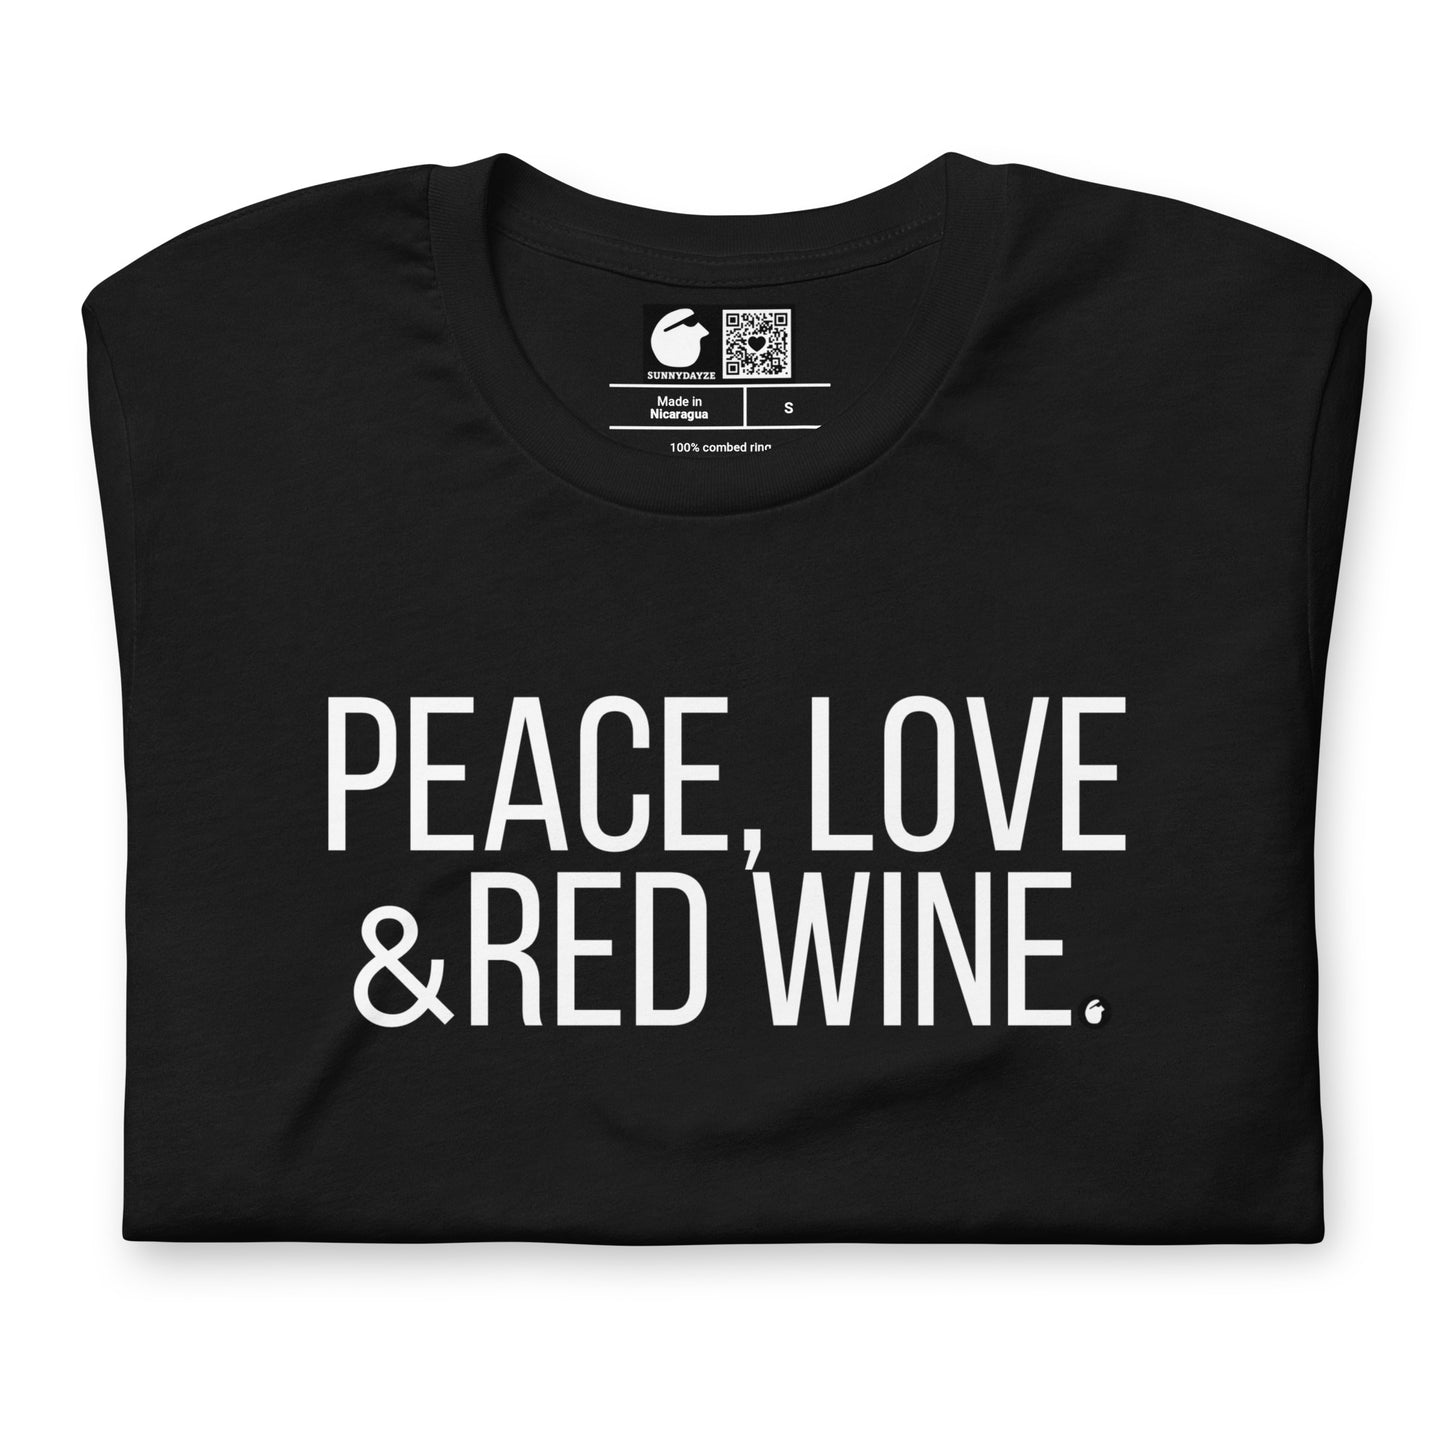 RED WINE Short-Sleeve Unisex t-shirt